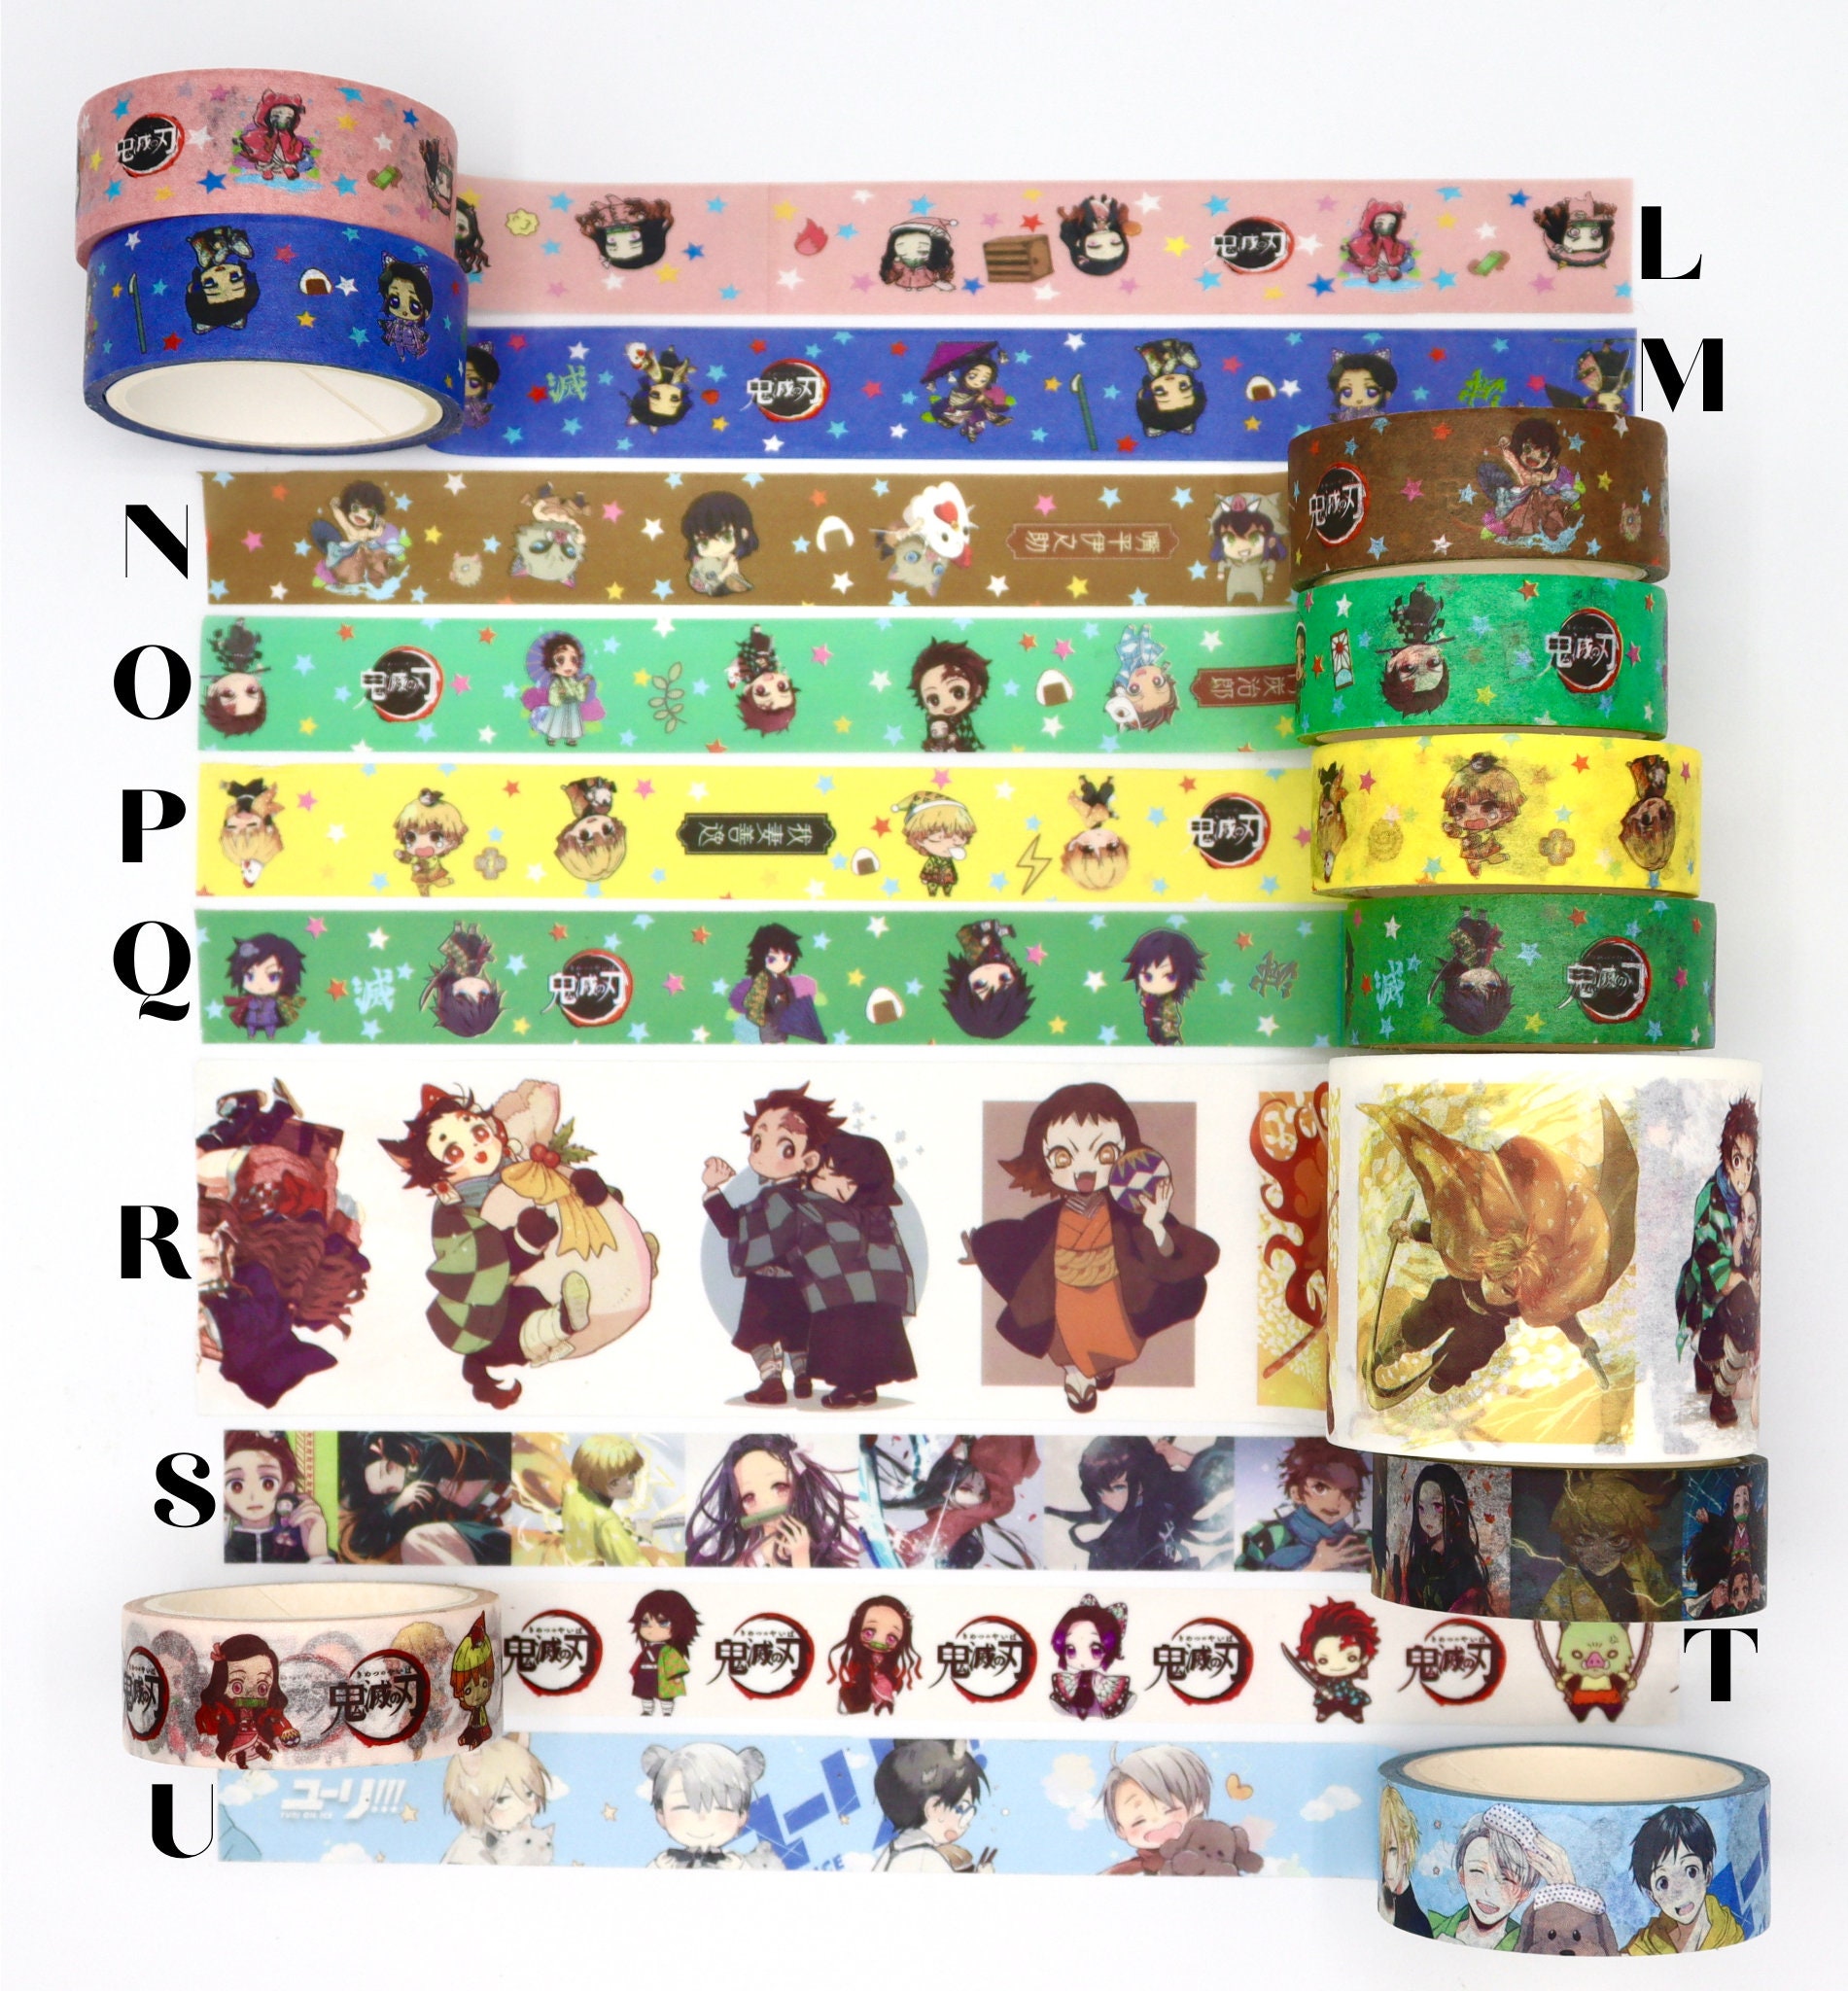 Washi Tape Samples,washi Tape, Cute Tape, Masking Tape,deco Tape Lucky Star  Girls Themed Washi Tape40mm Width, JG-01 